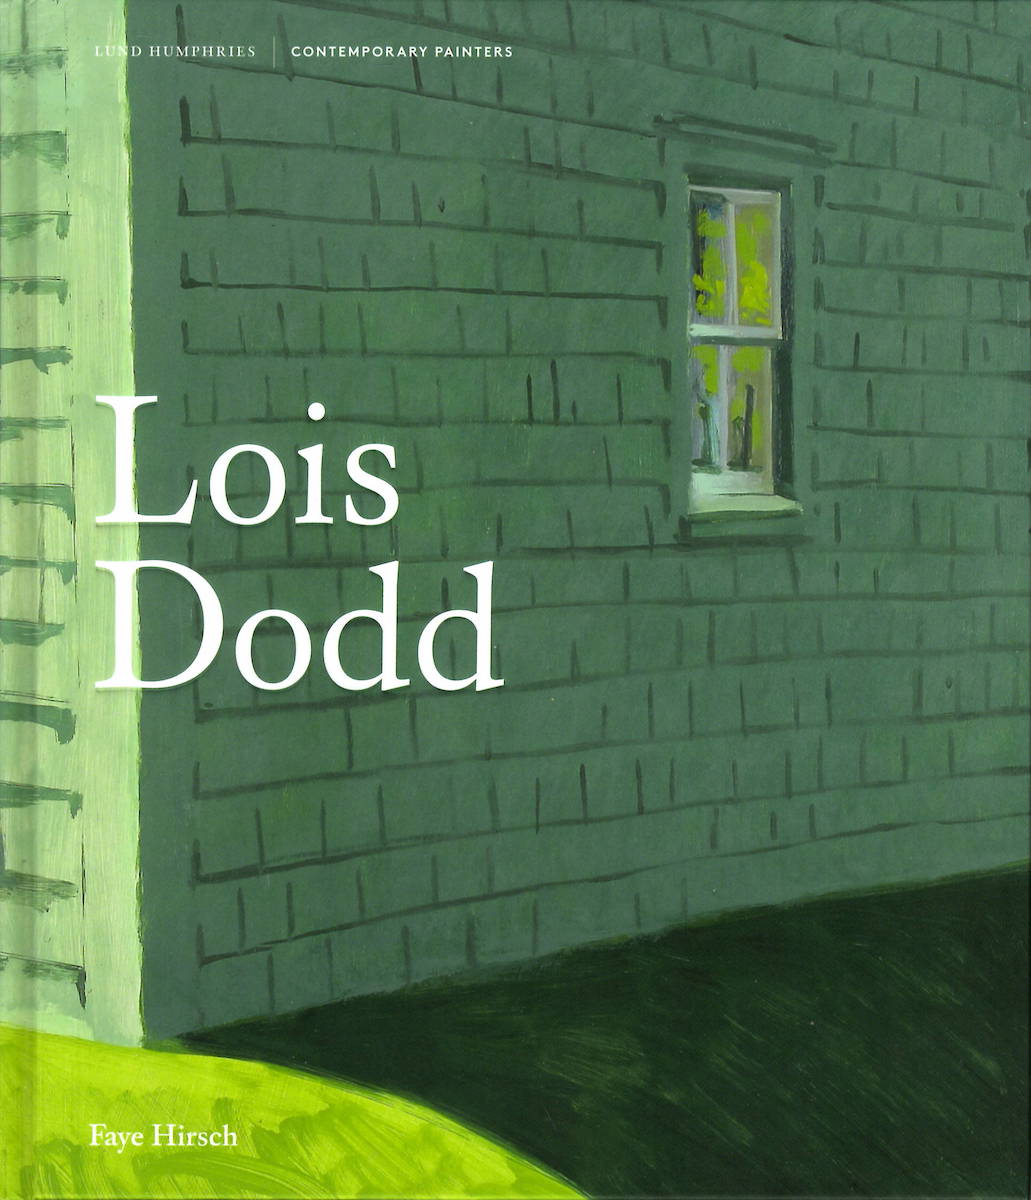 Lois Dodd